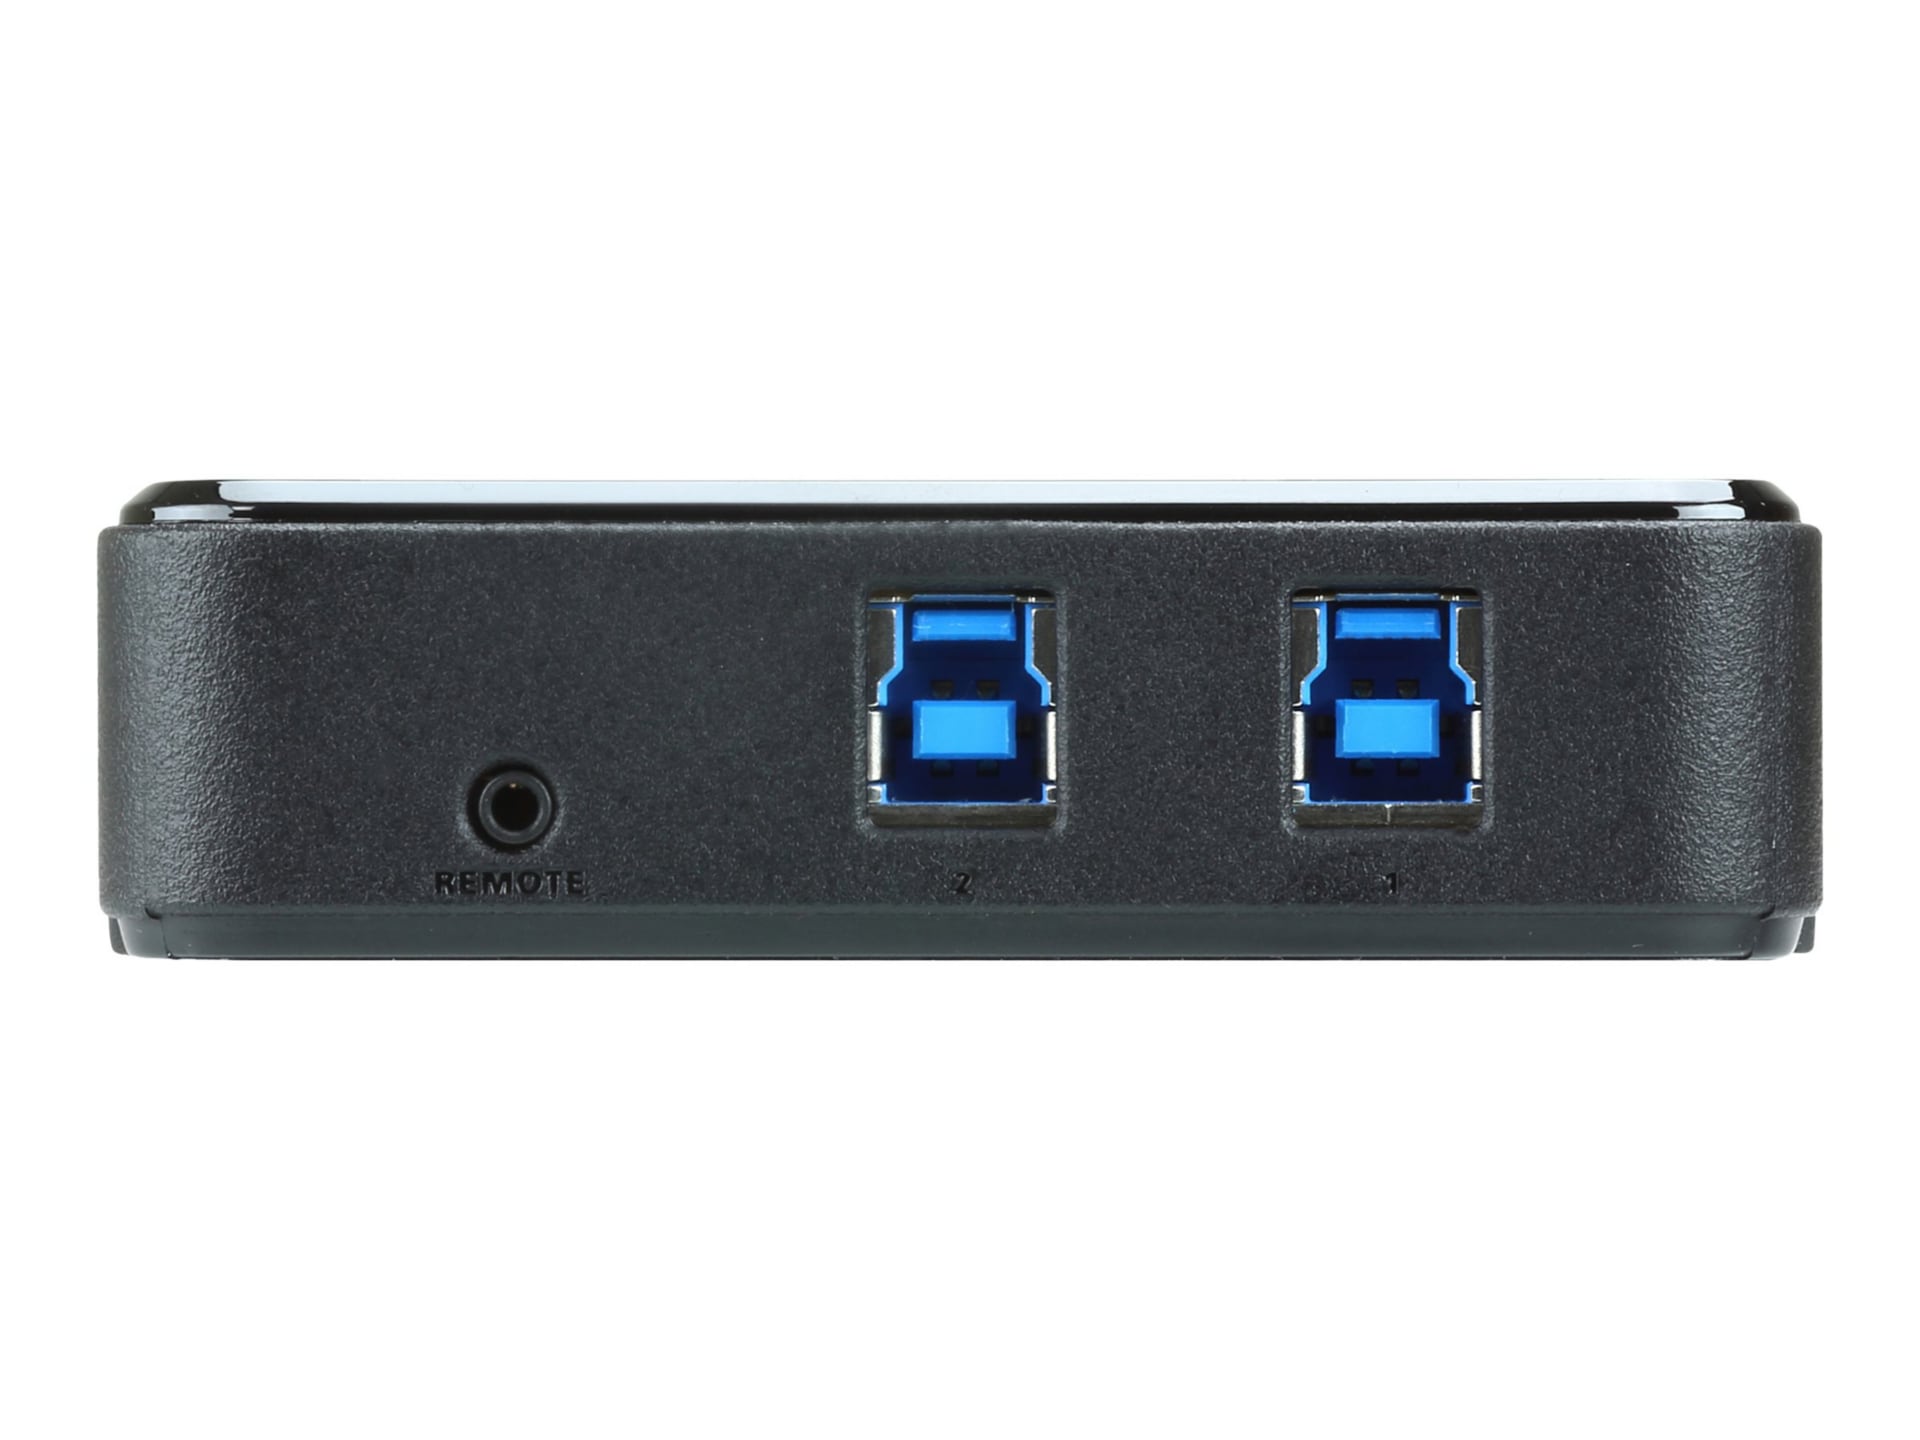 ATEN US234 - USB peripheral sharing switch - 4 ports